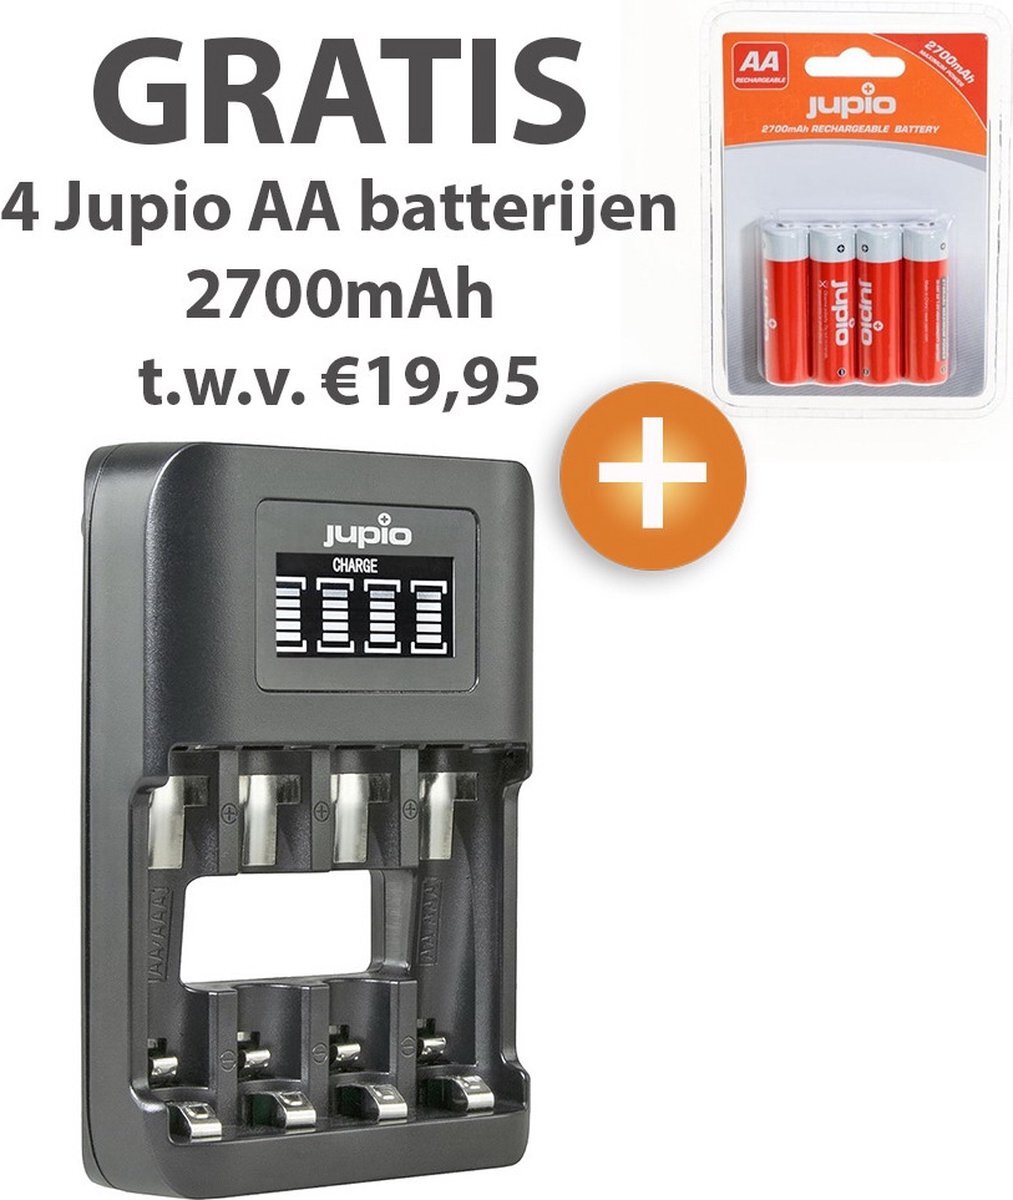 Jupio USB 4-slots UltraFast AA/AAA batterijlader + gratis 4-pack 2700mAh AA batterijen